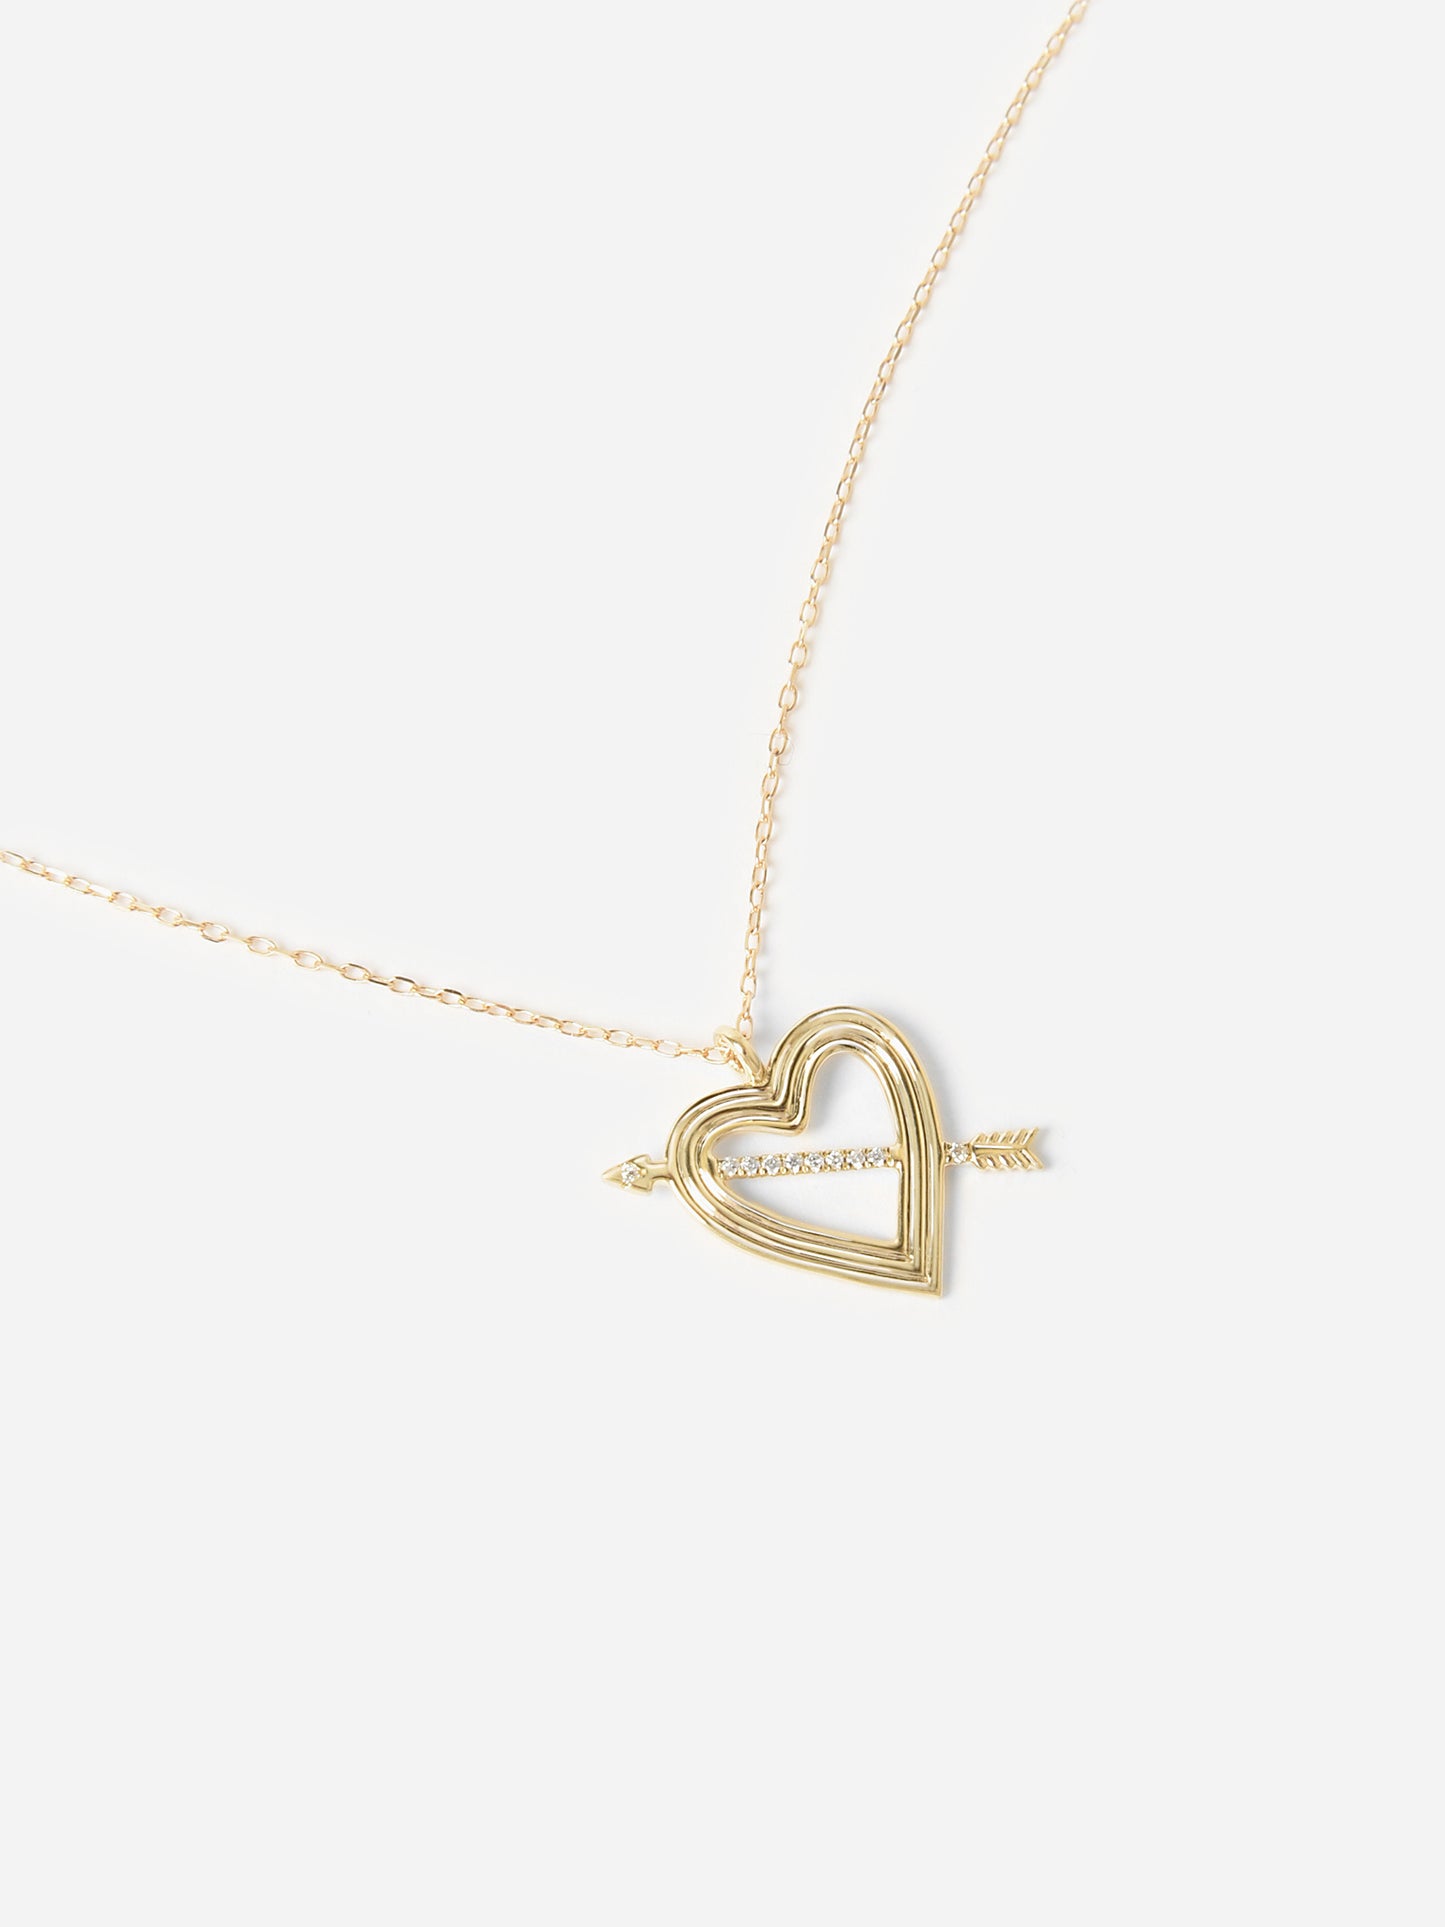 Adina Reyter Women's Pavé Open Heart Arrow Necklace